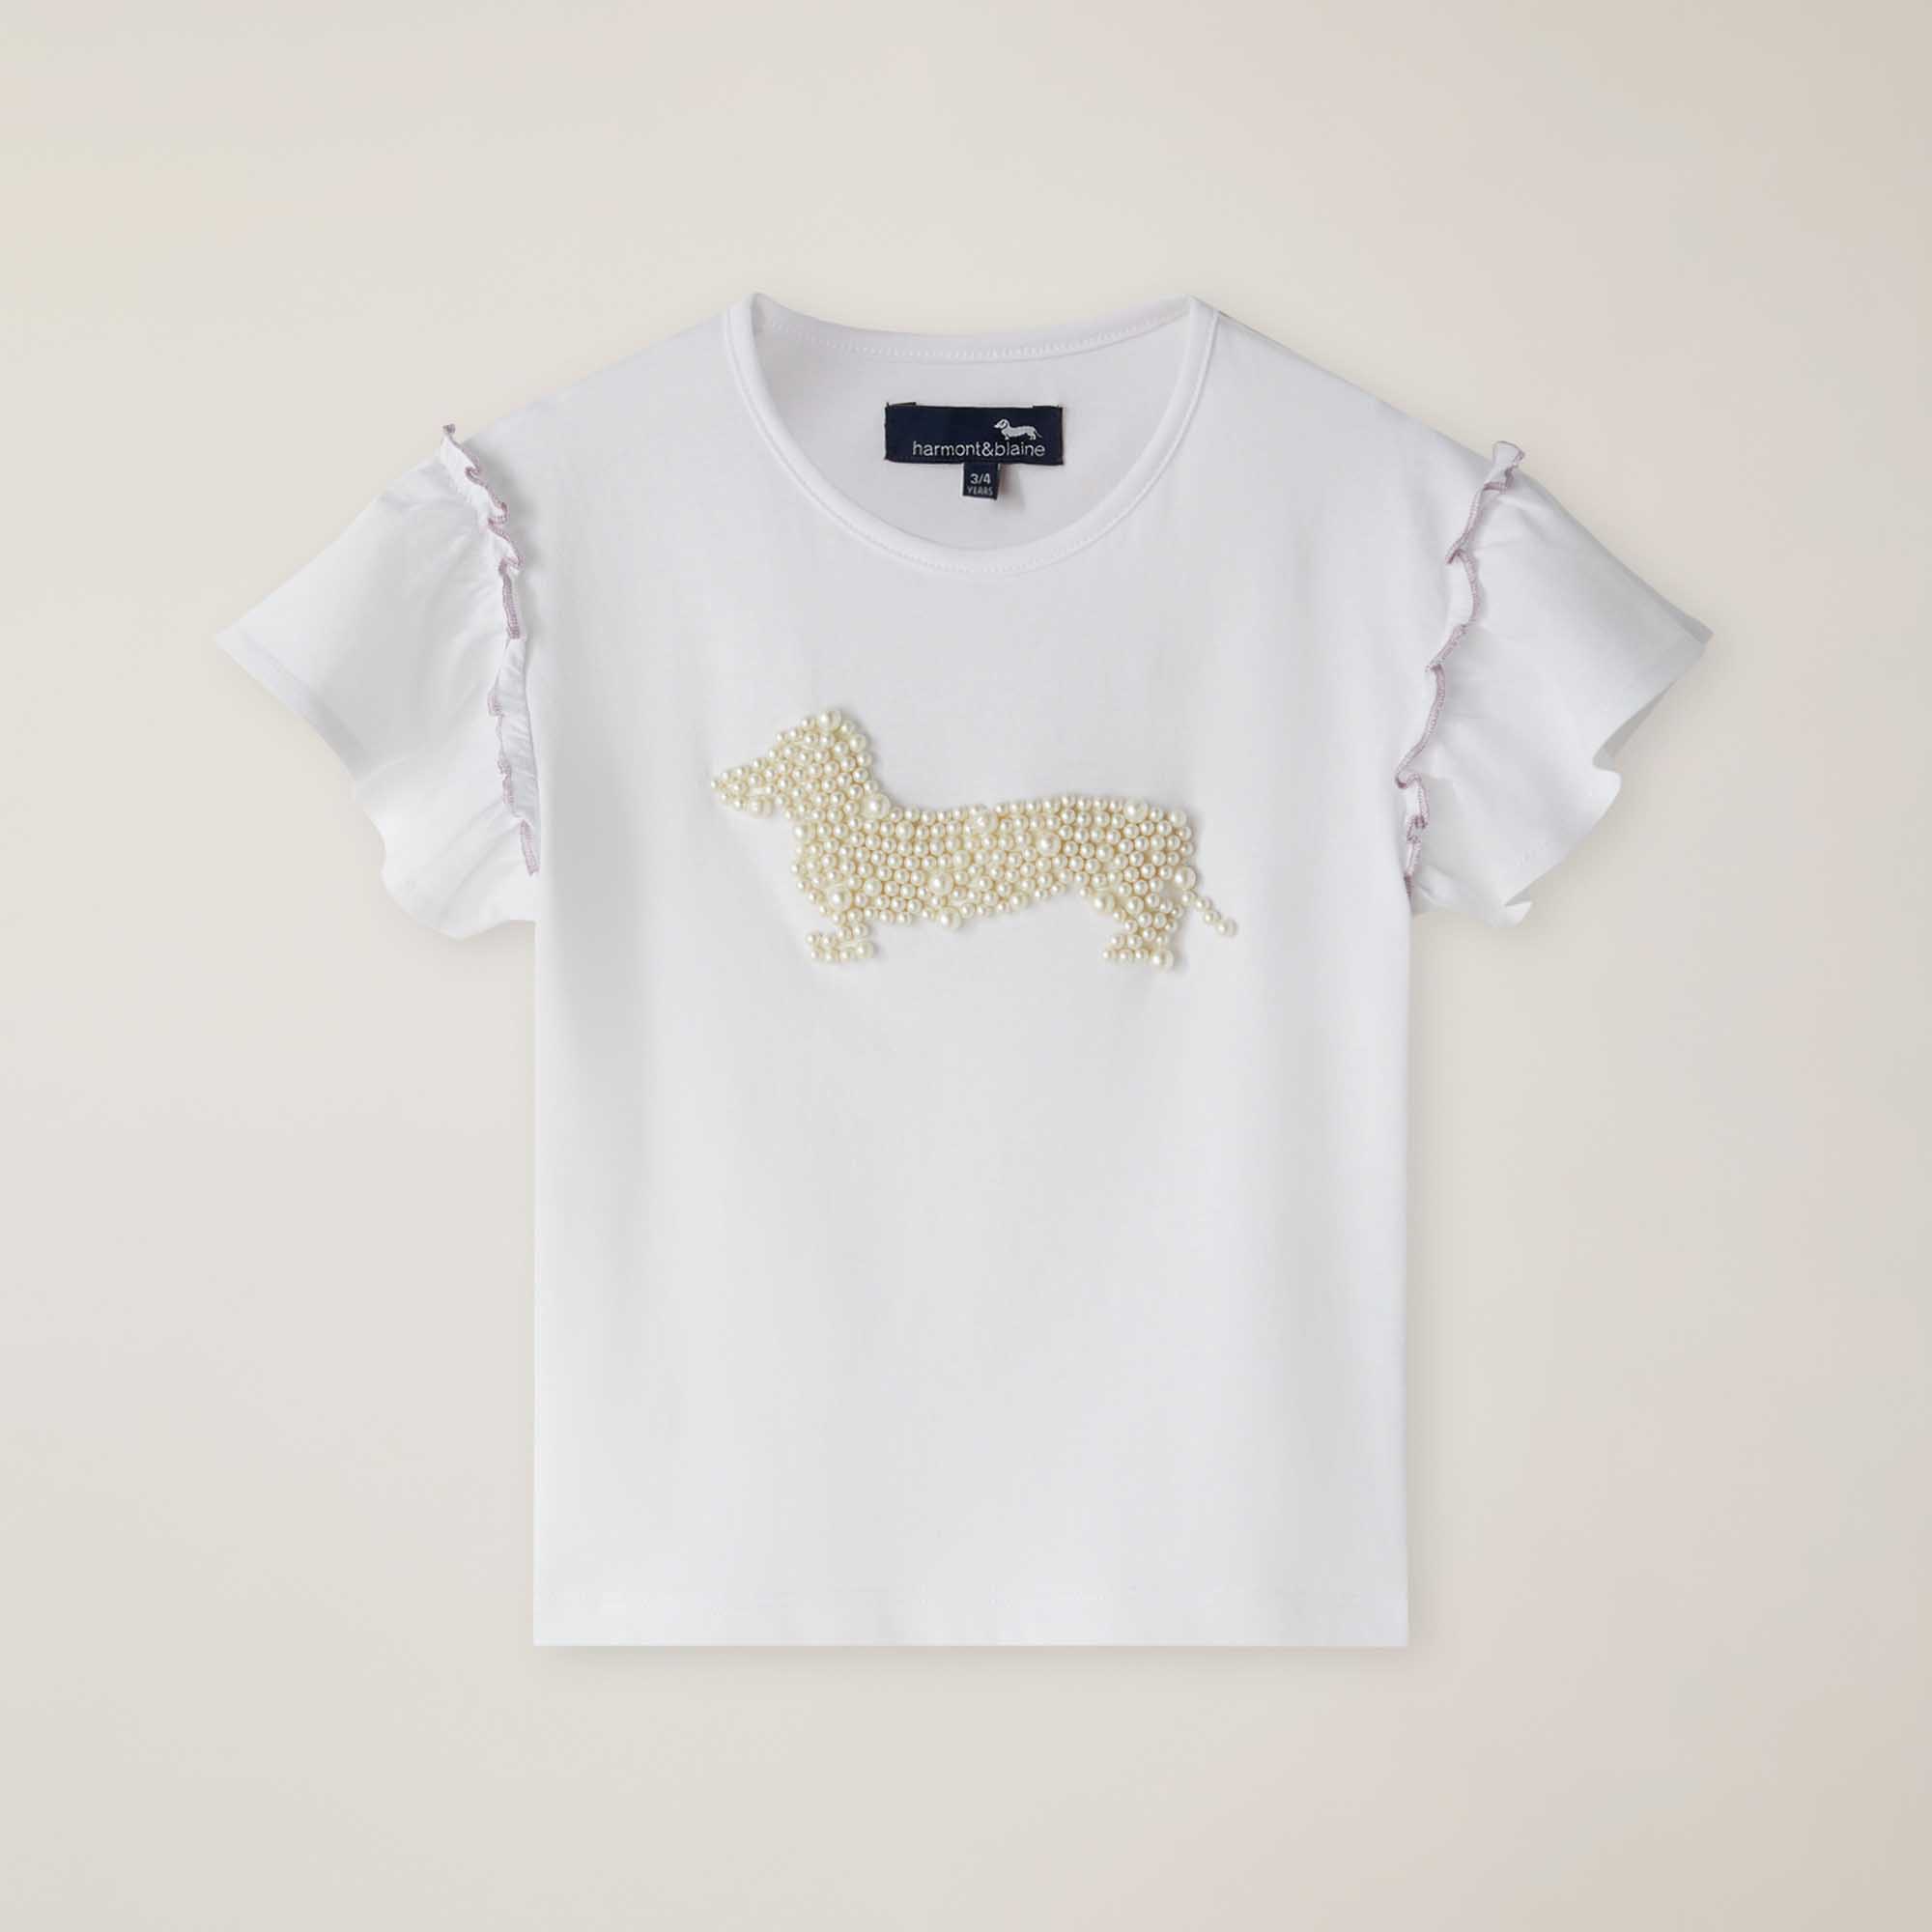 T-Shirt Maniche Volant E Applicazione Bassotto Perle, Bianco, large image number 0